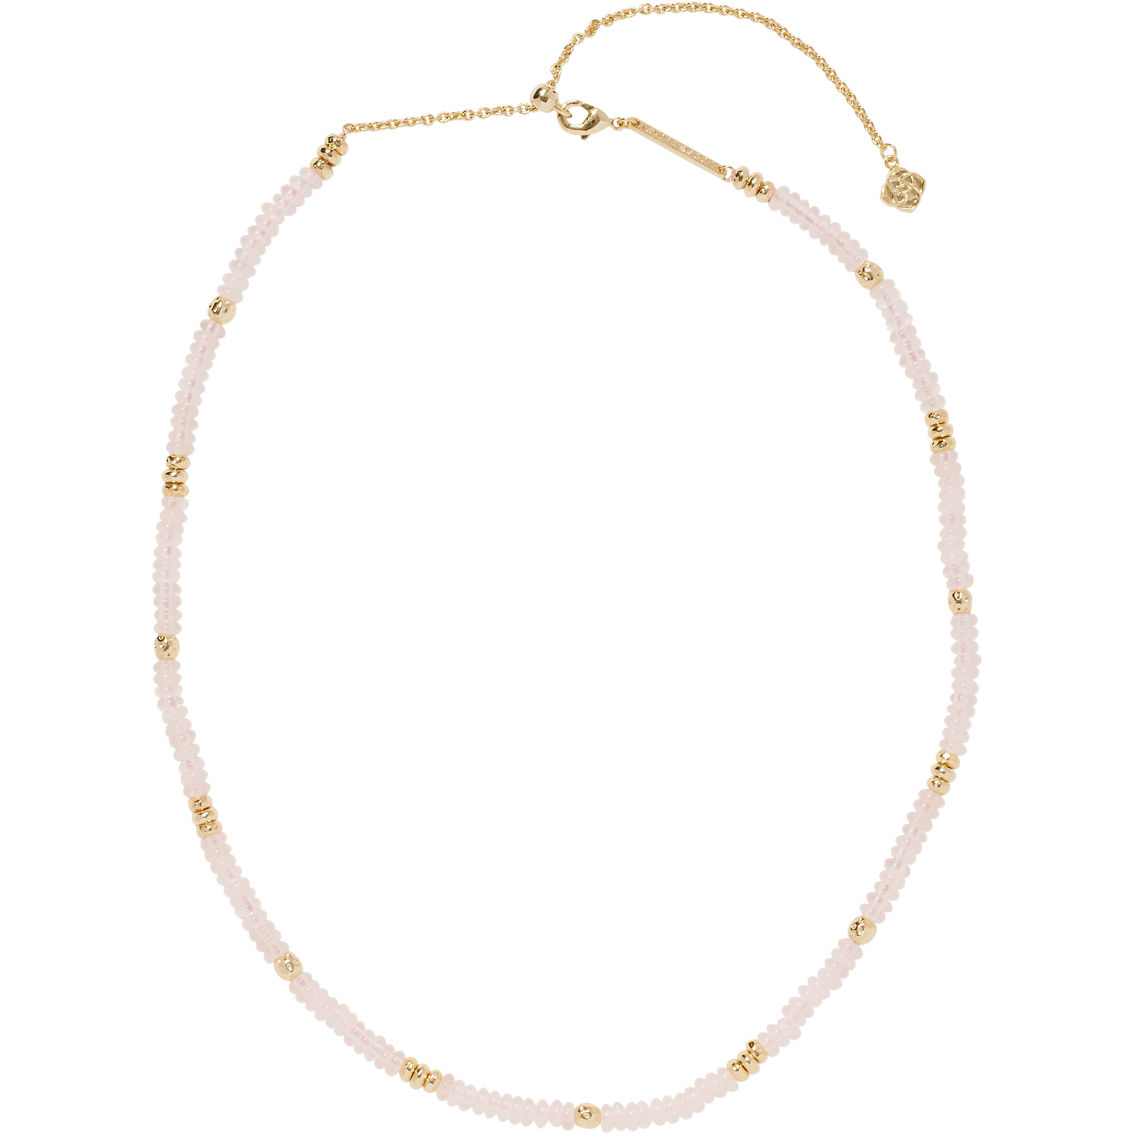 Kendra Scott Deliah Strand Necklace in Gold Rose Quartz - Image 2 of 5